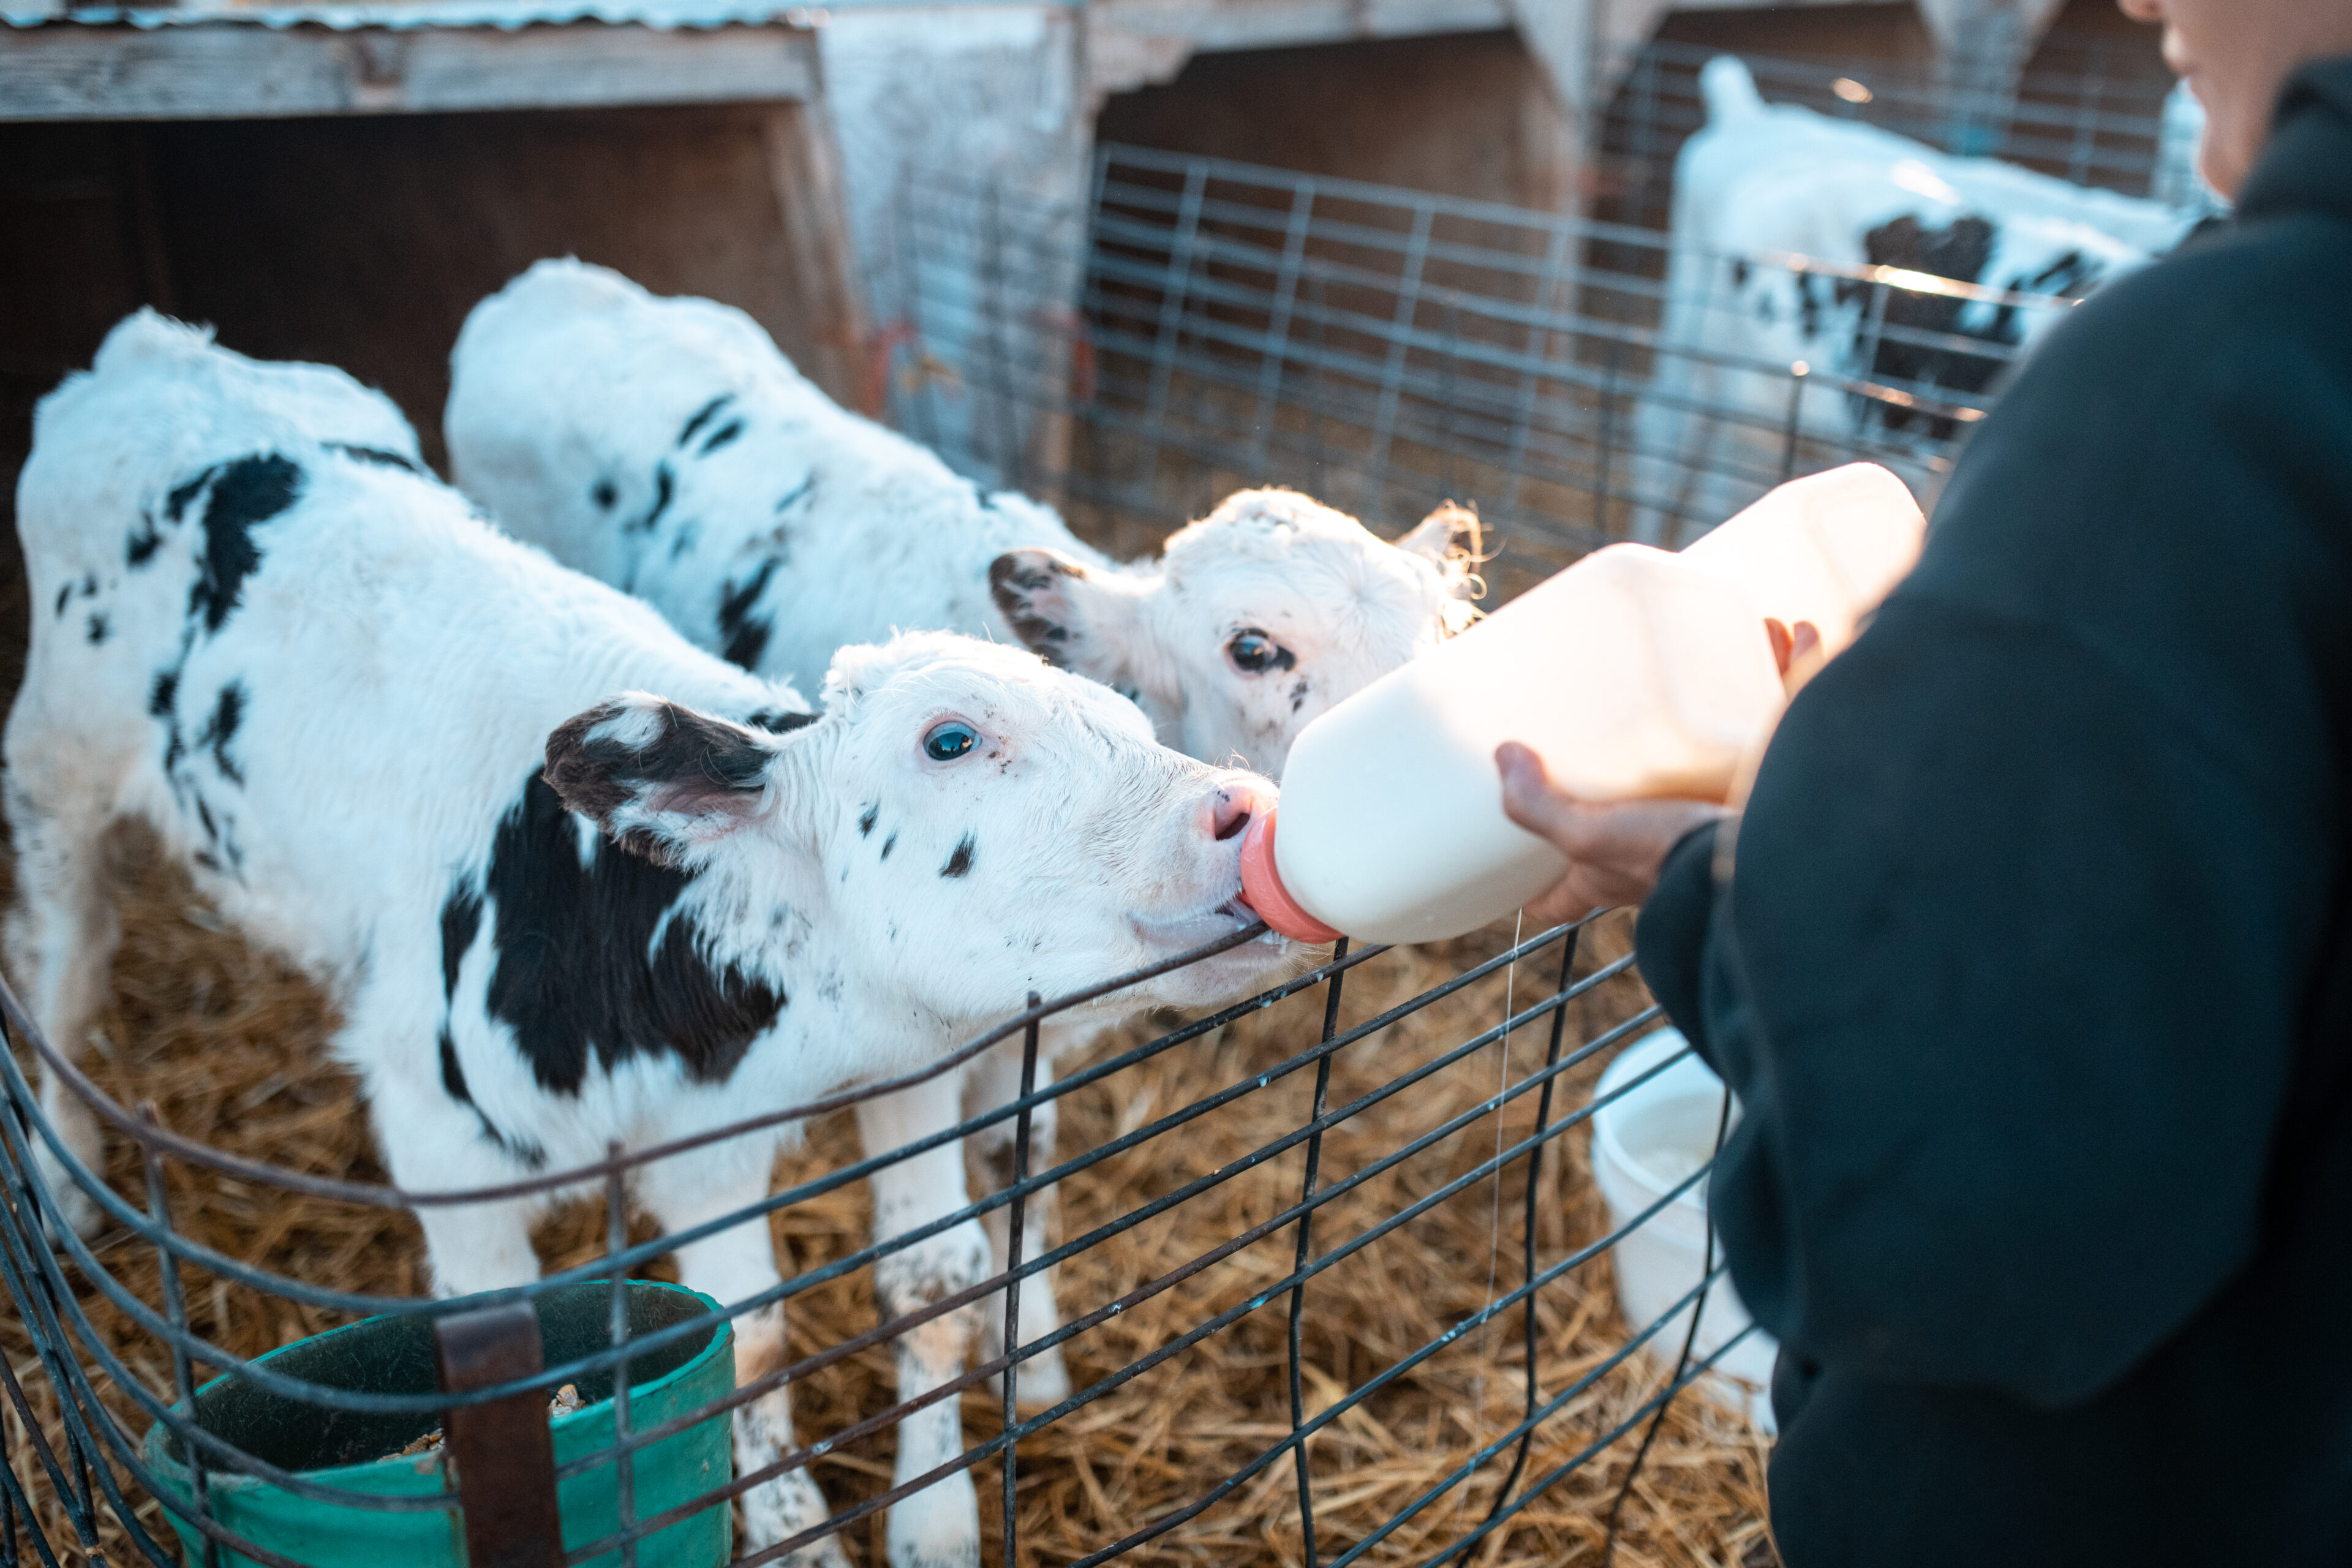 Farmer is feeding calves with milk on a ranch in Utah, USA.